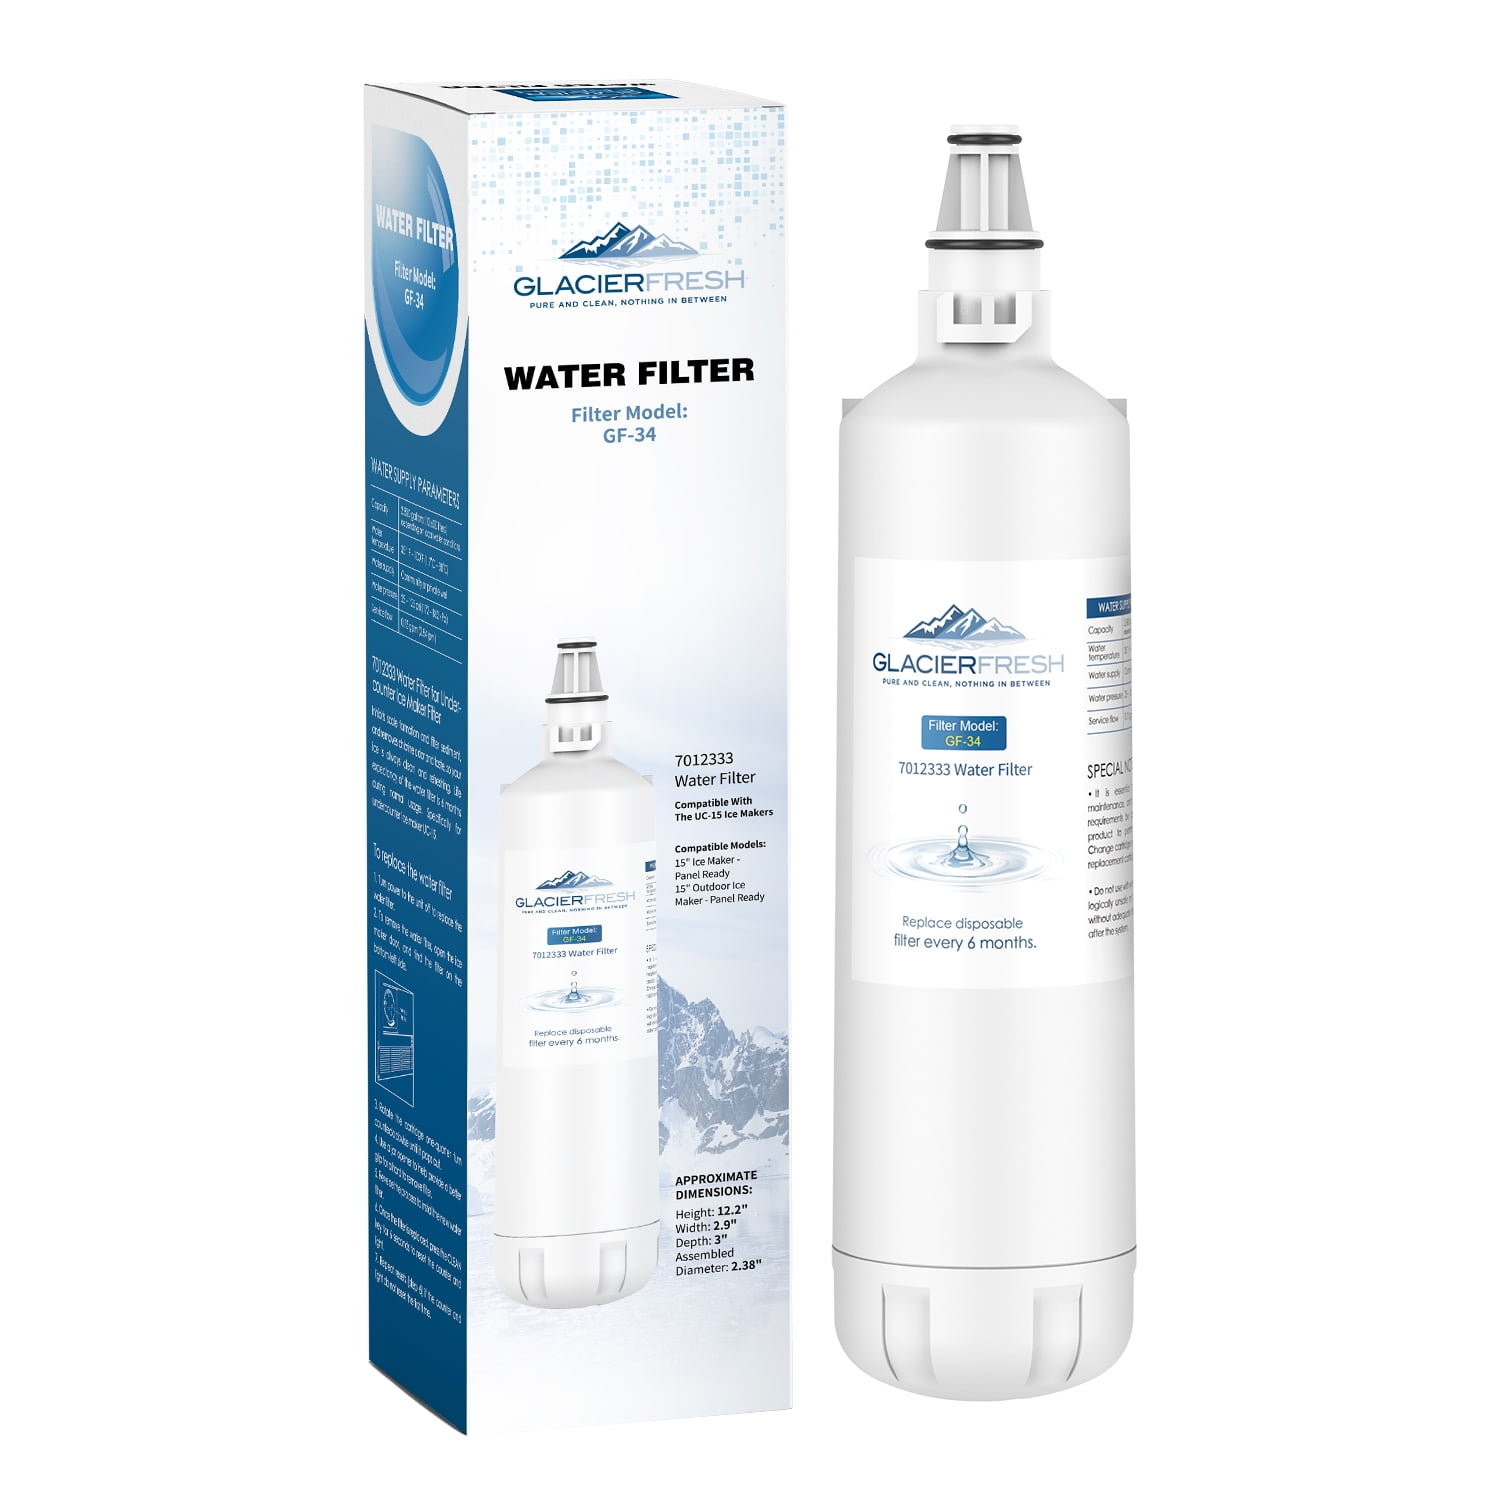 GLACIER FRESH Water Filter 